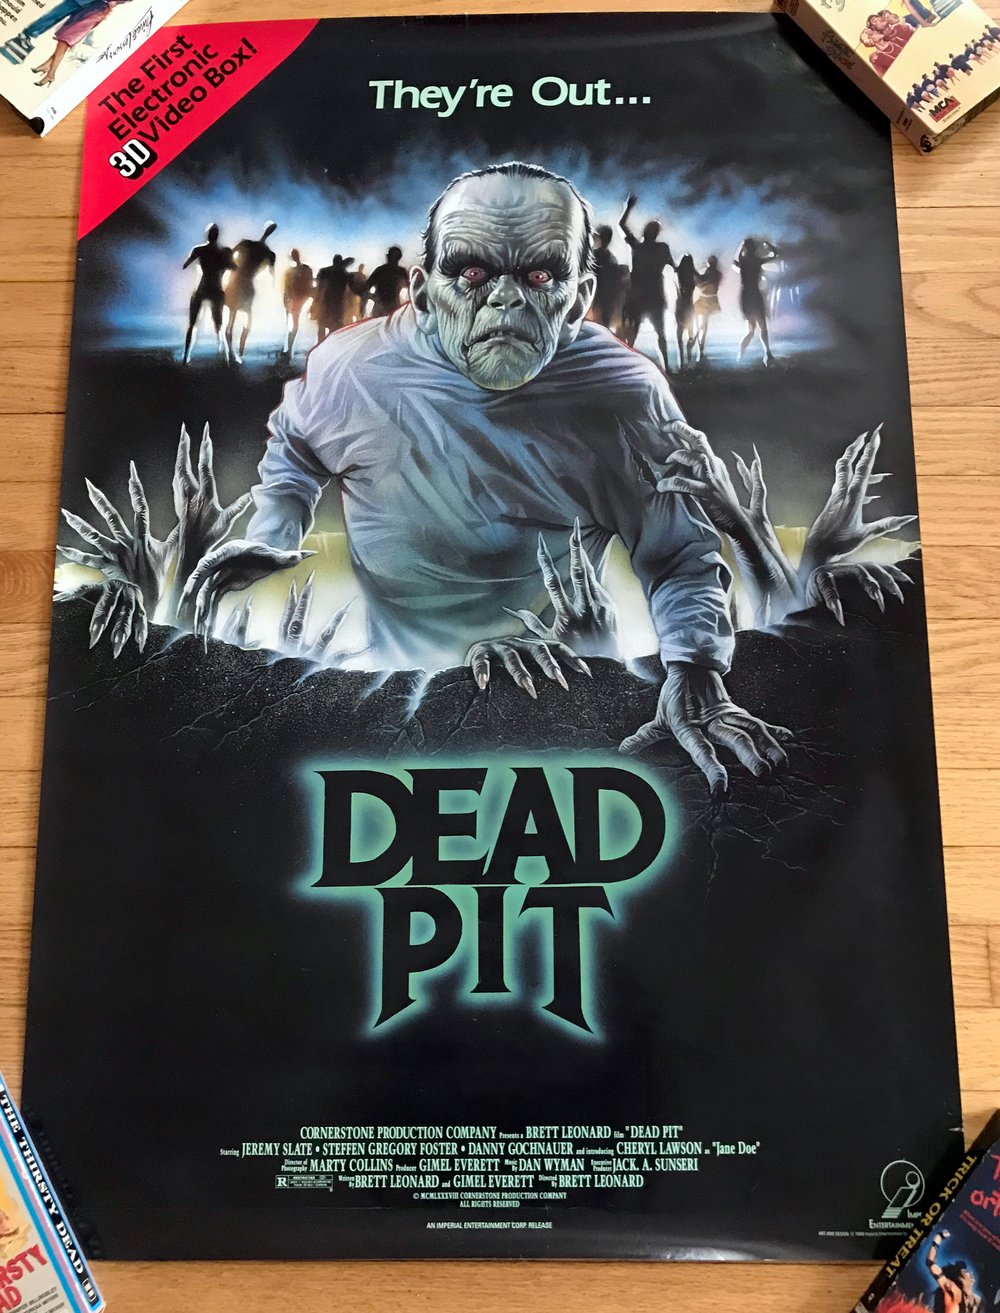 1989 DEAD PIT Original Imperial Entertainment Video Promotional Movie Poster